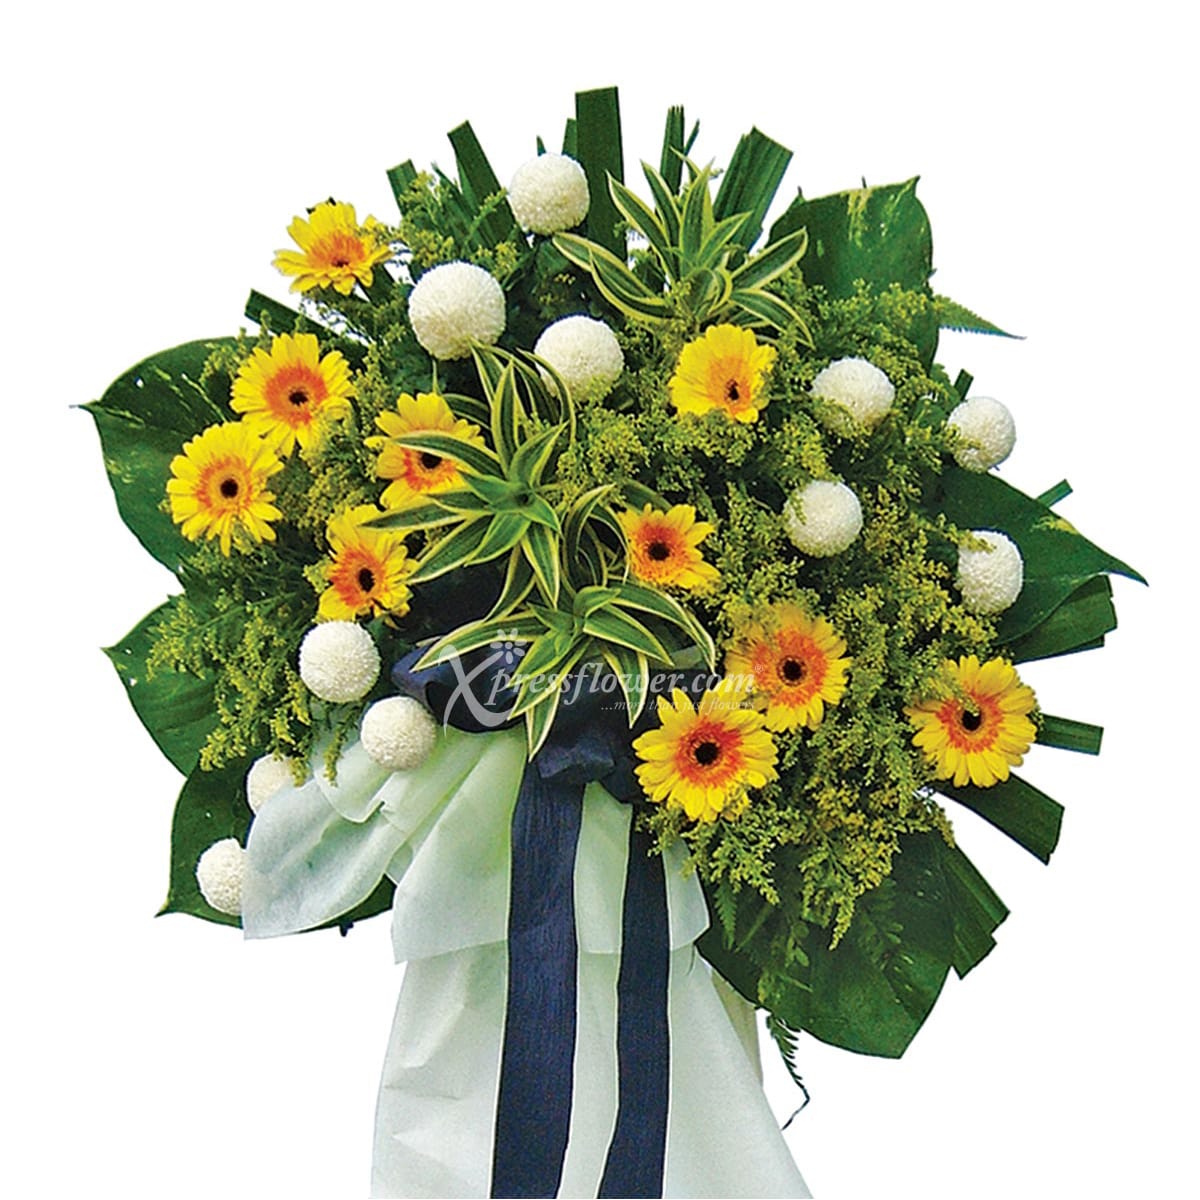 Fond Memories (Funeral Condolence Flower Wreath)